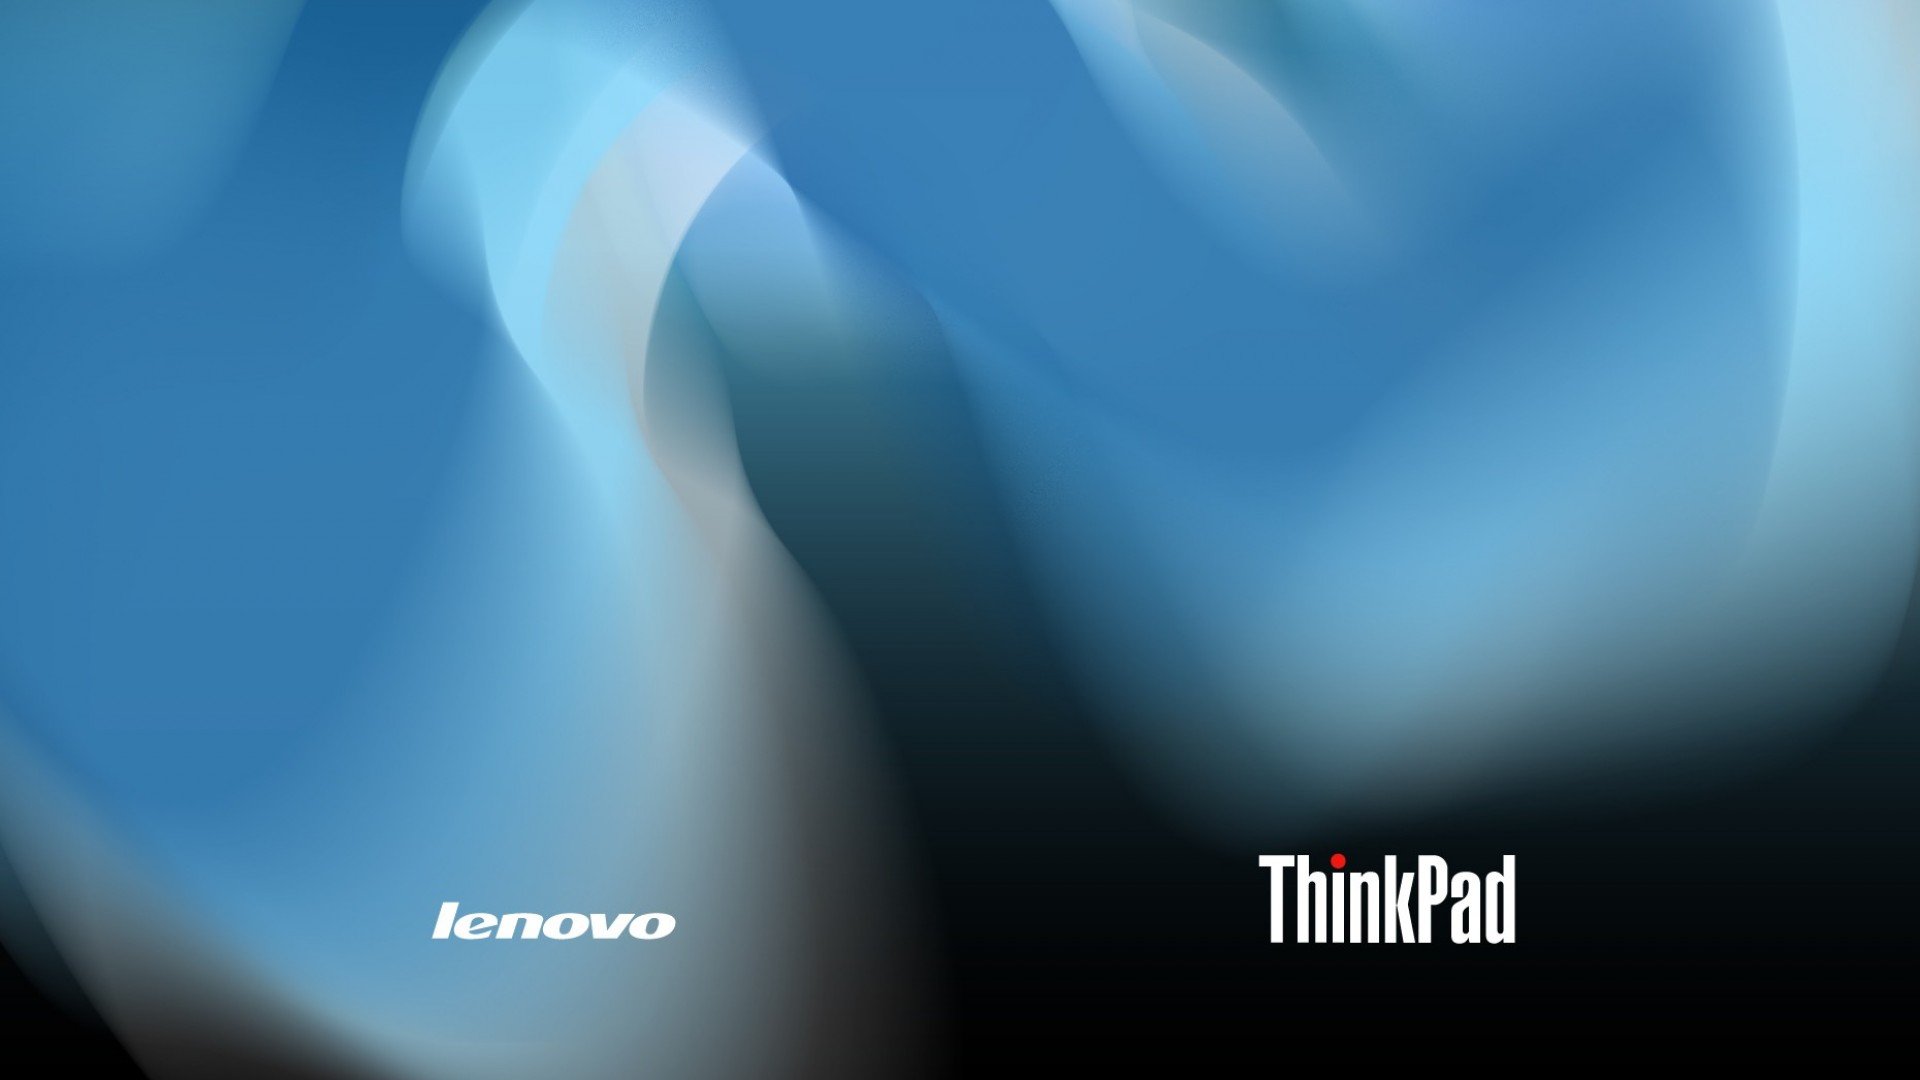 Handpicked Lenovo Wallpaper Background In HD For